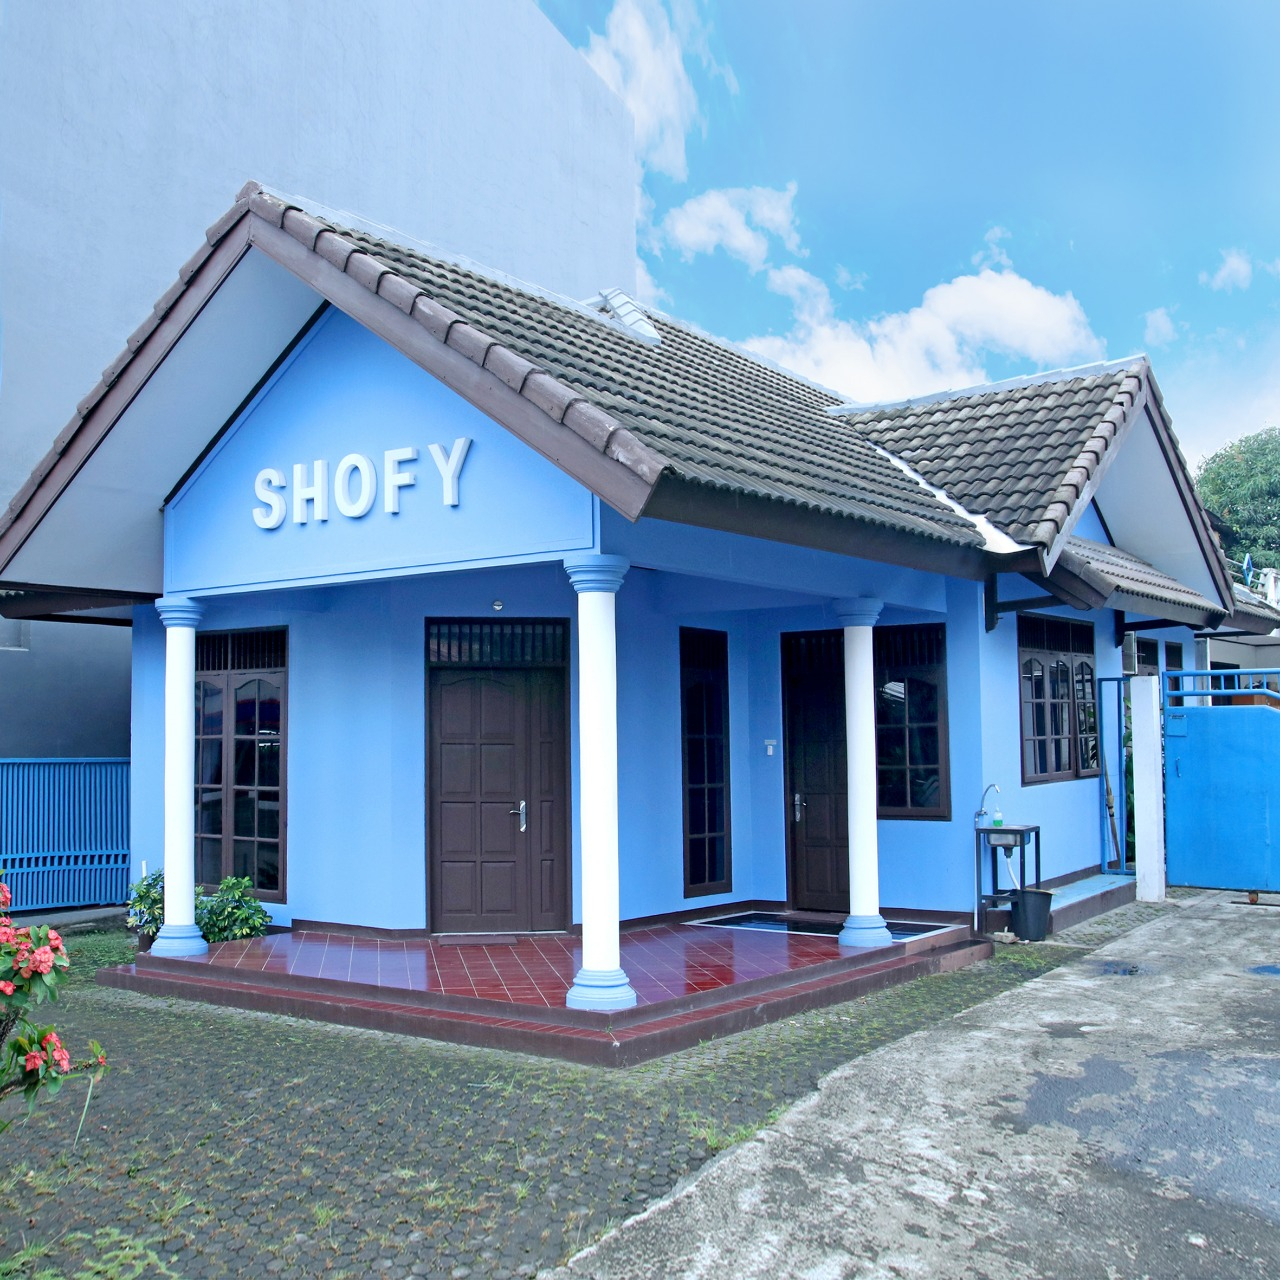 Shofy Guest House RedPartner, Bandung